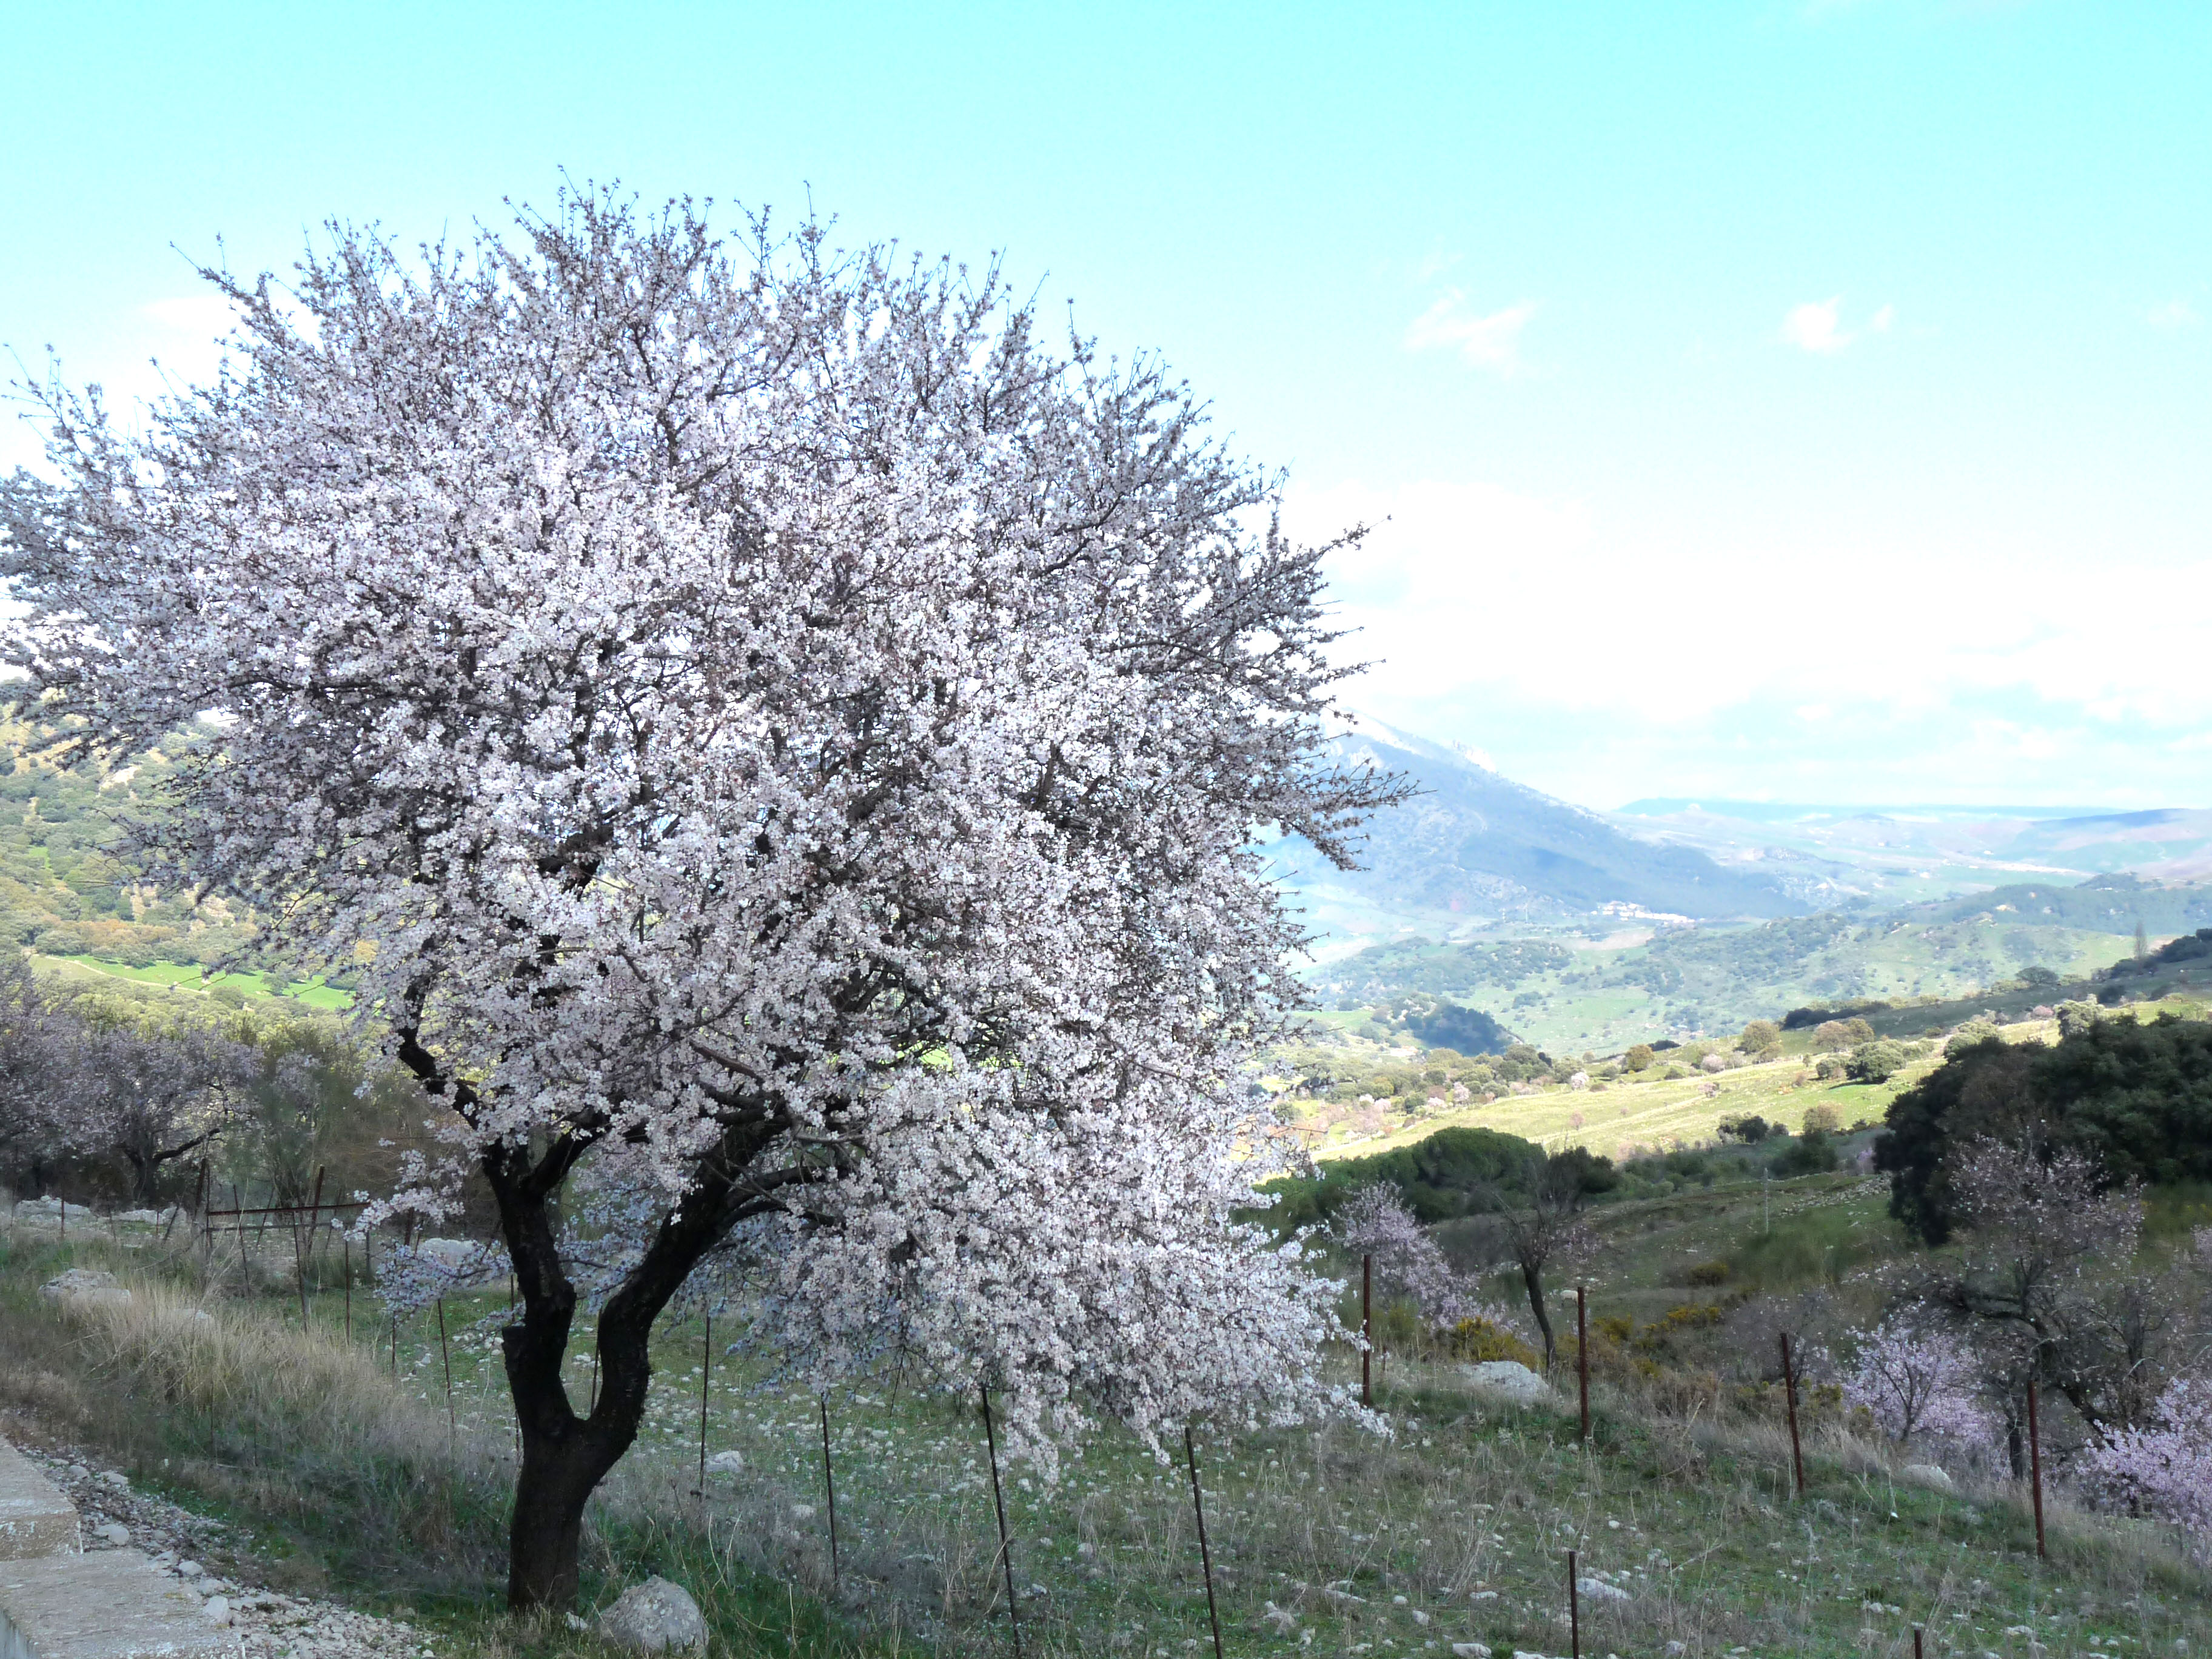 File:Almond blossom (5561007173).jpg - Wikimedia Commons